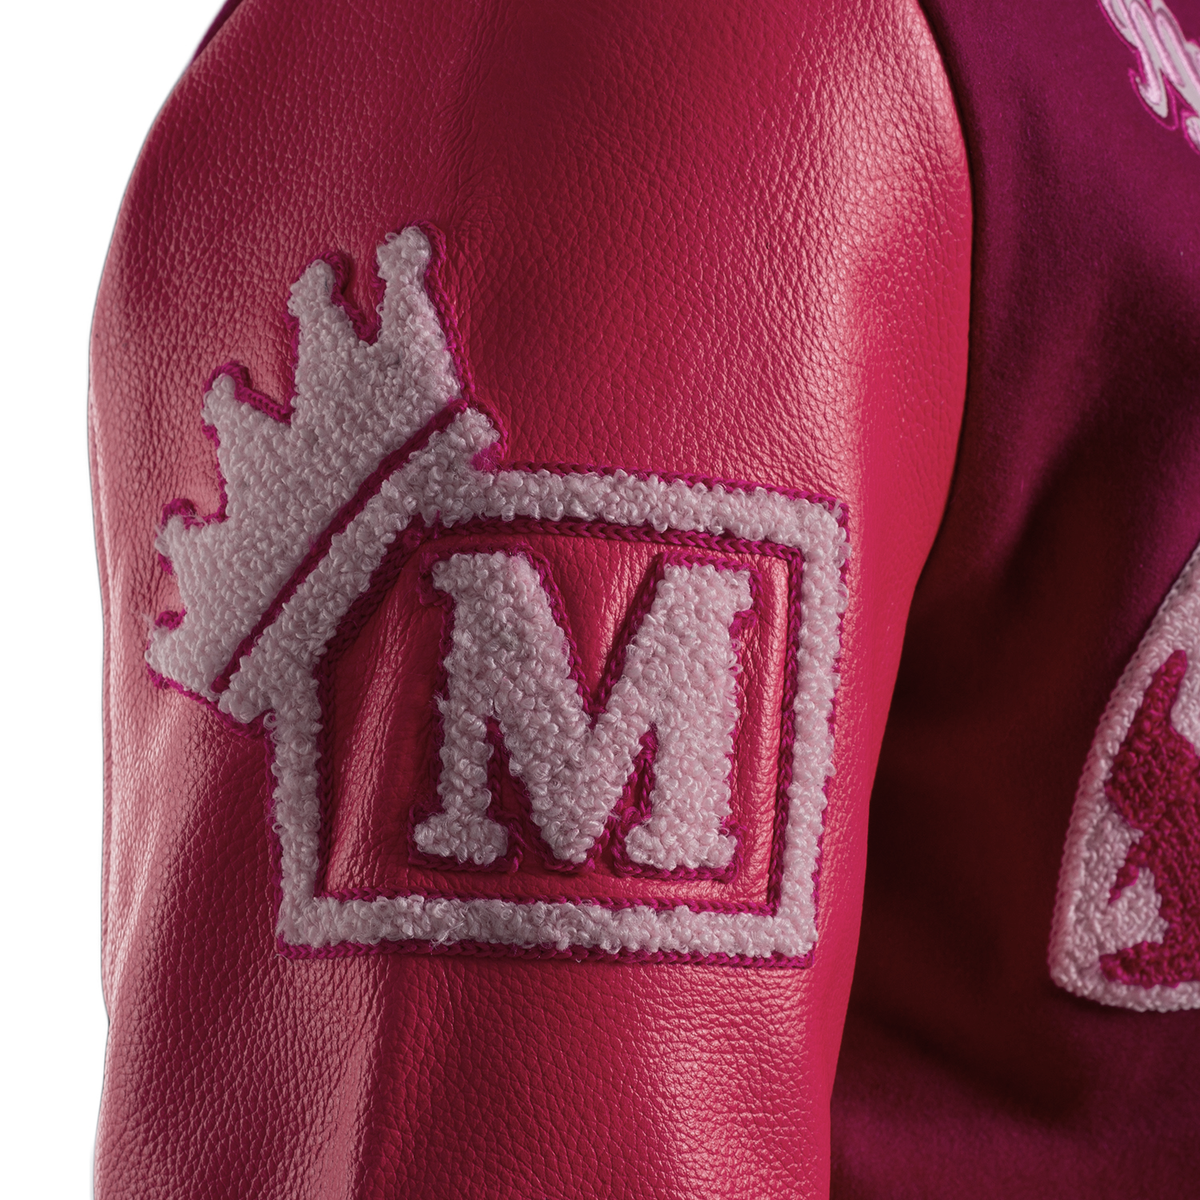 MDB Brand Women's Varsity Jacket - Monochrome Pink